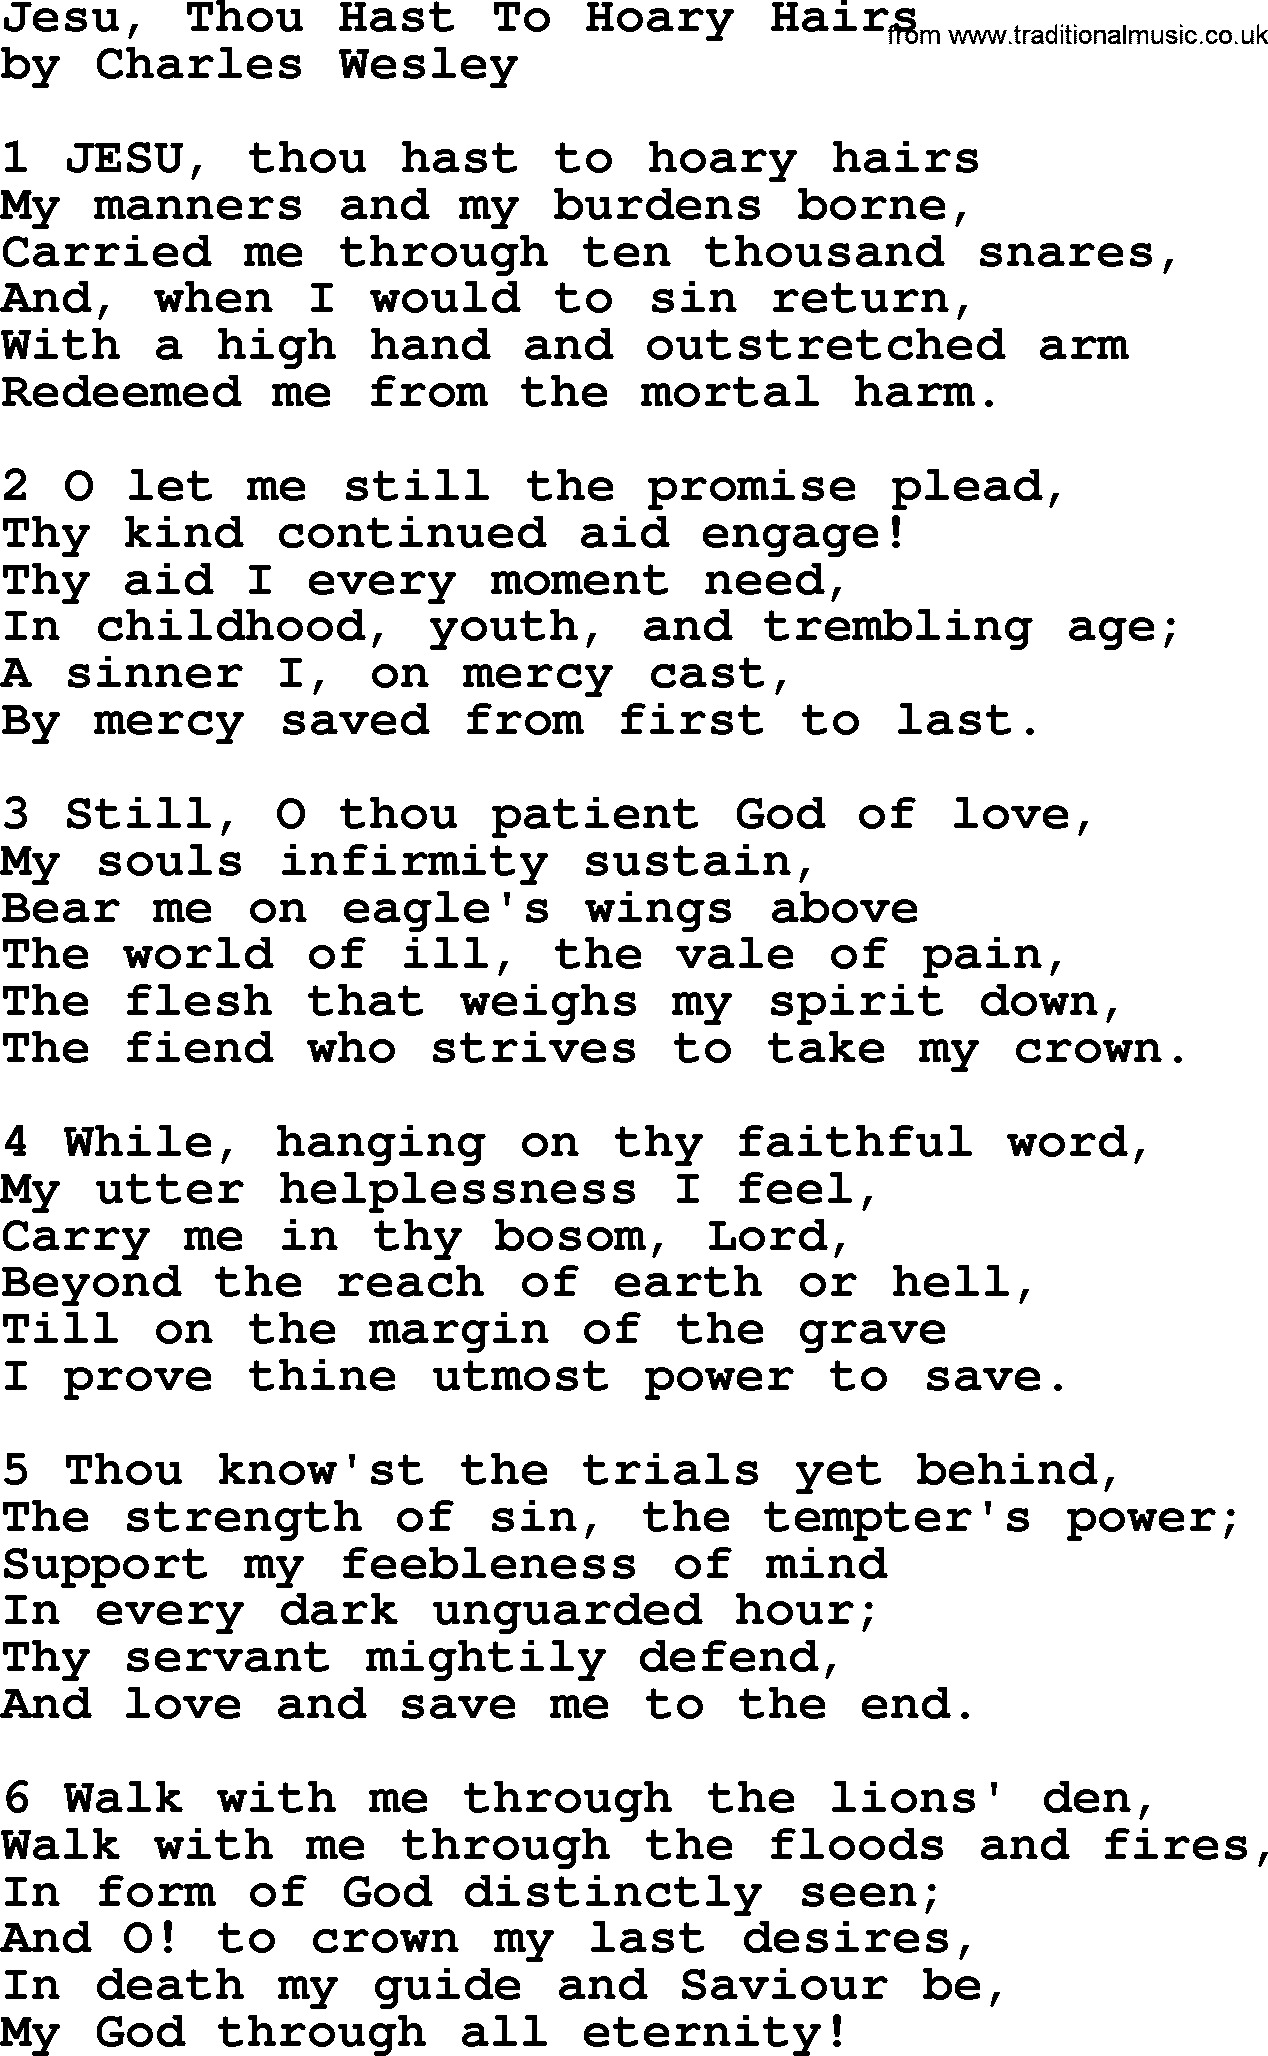 Charles Wesley hymn: Jesu, Thou Hast To Hoary Hairs, lyrics